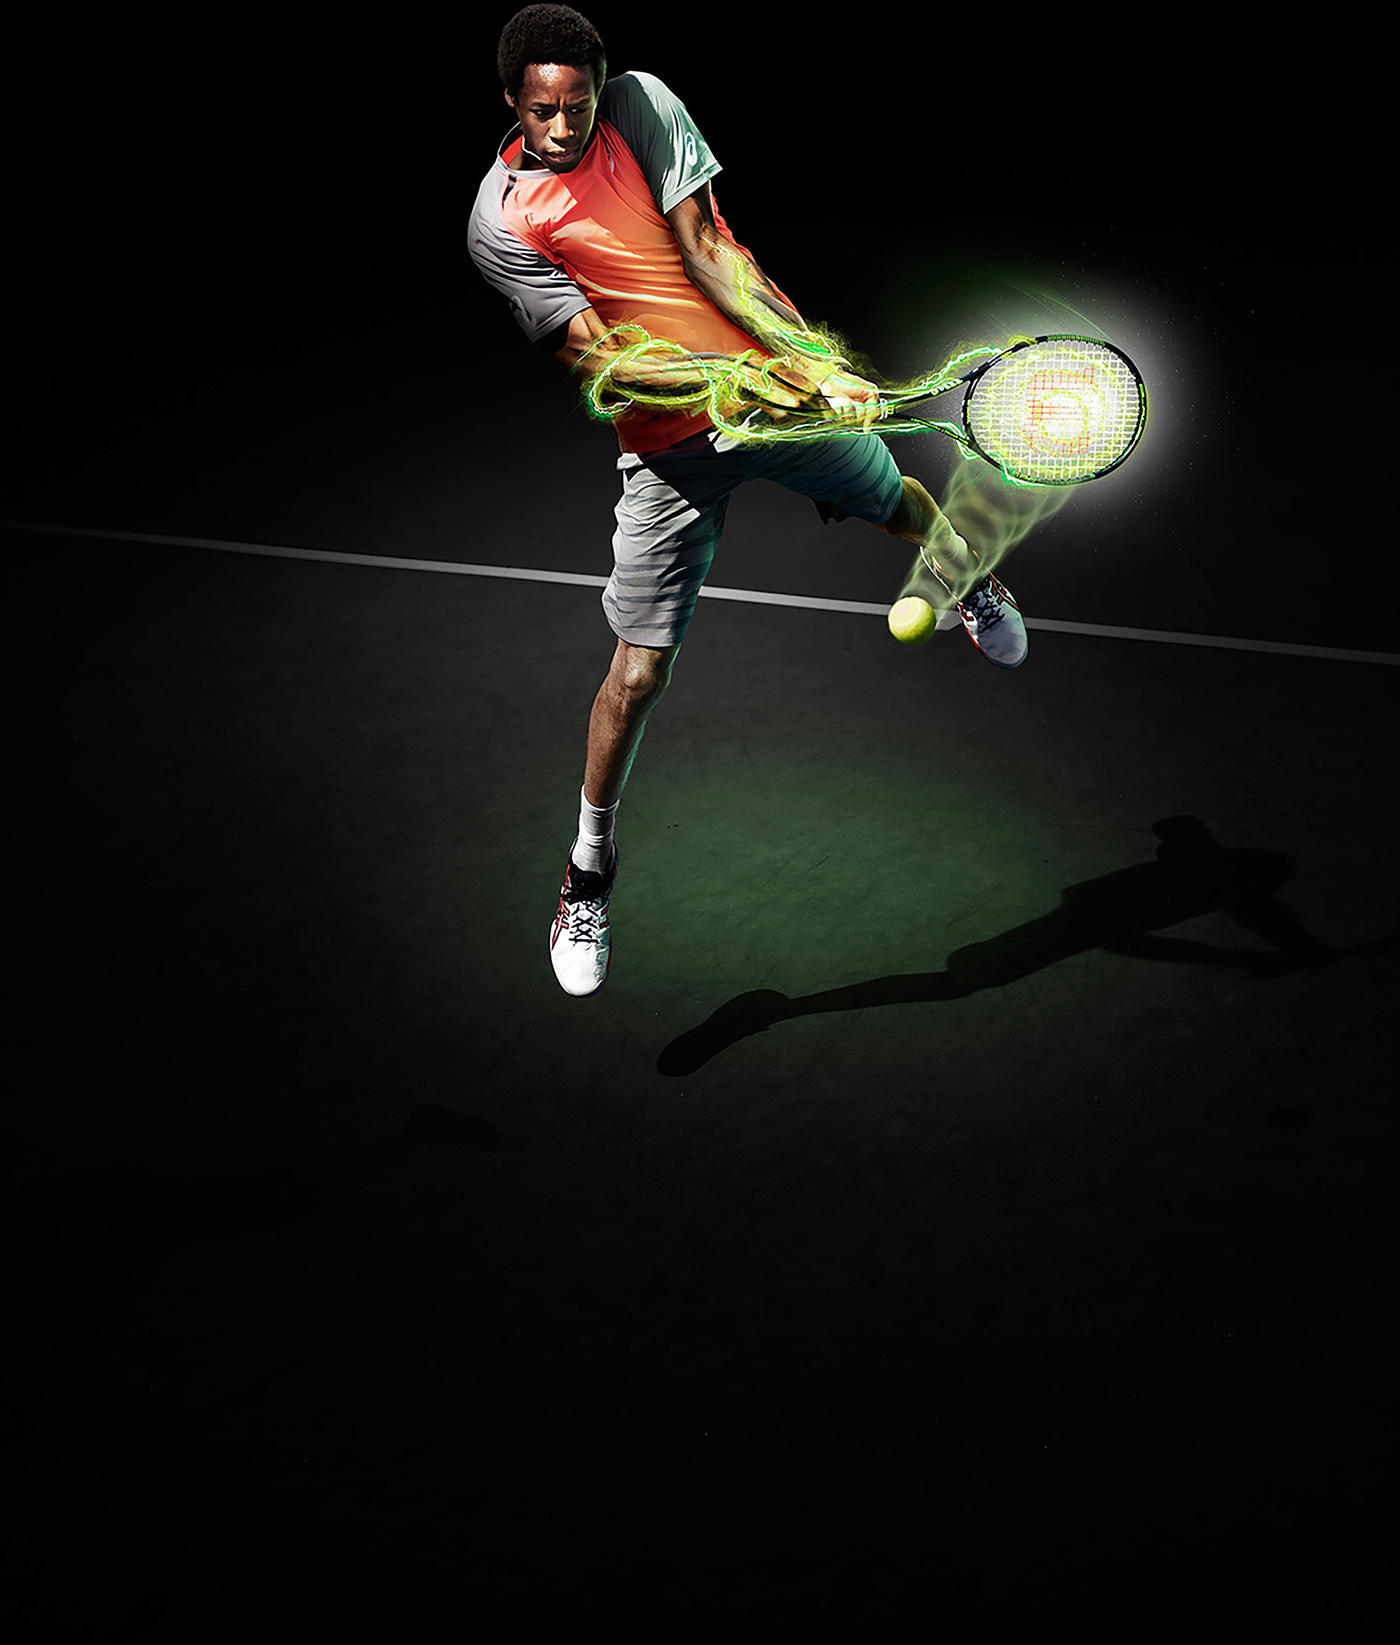 energy light trails light waves tennis wilson